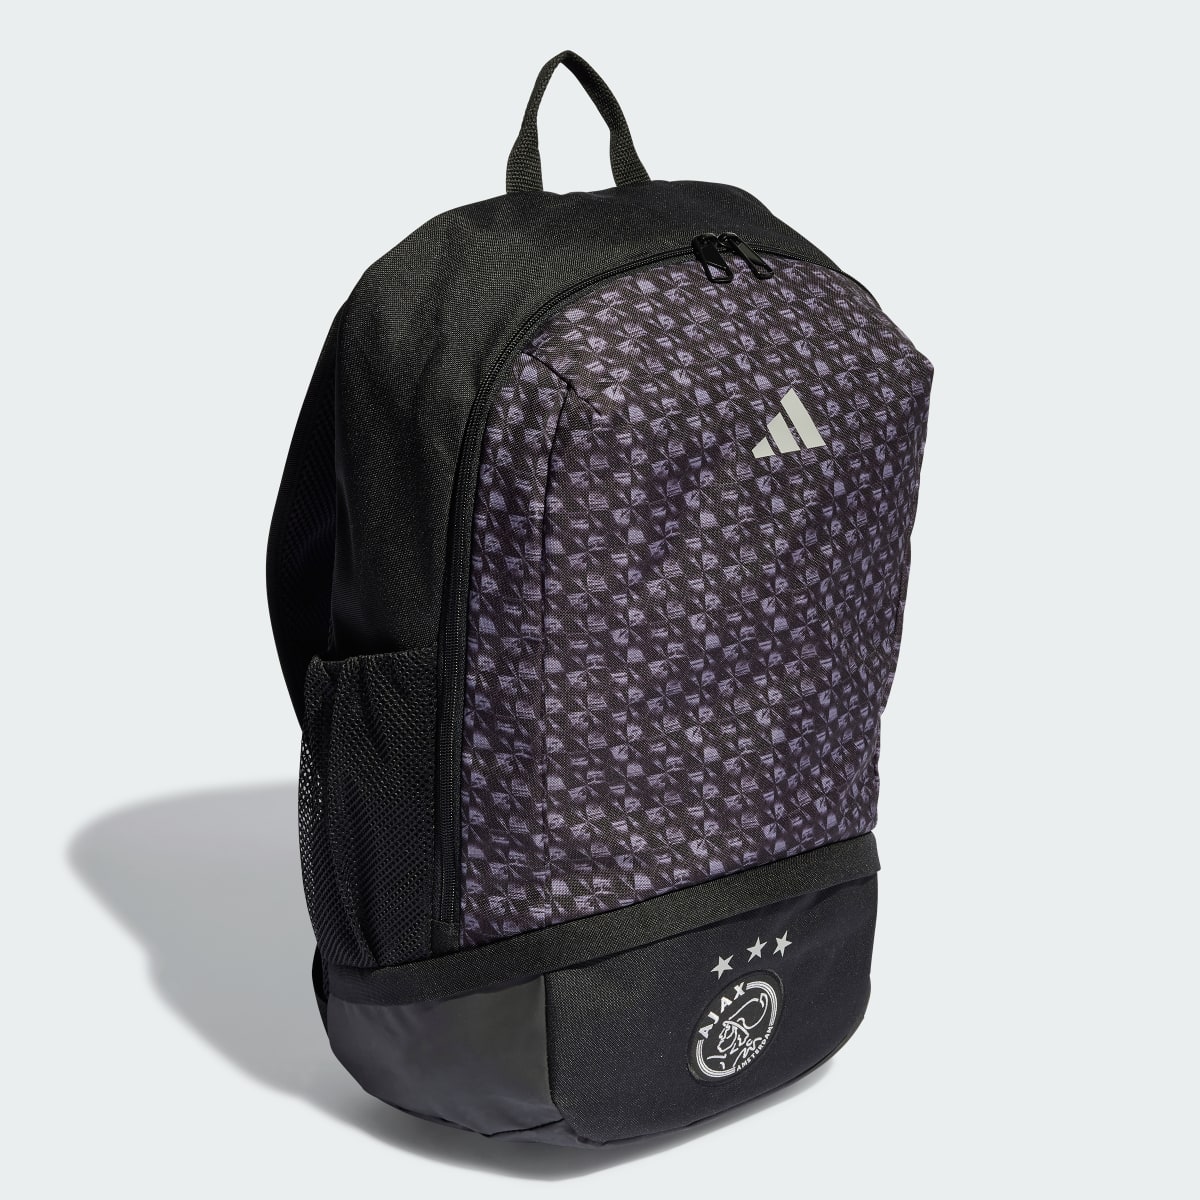 Adidas Ajax Amsterdam Backpack. 4